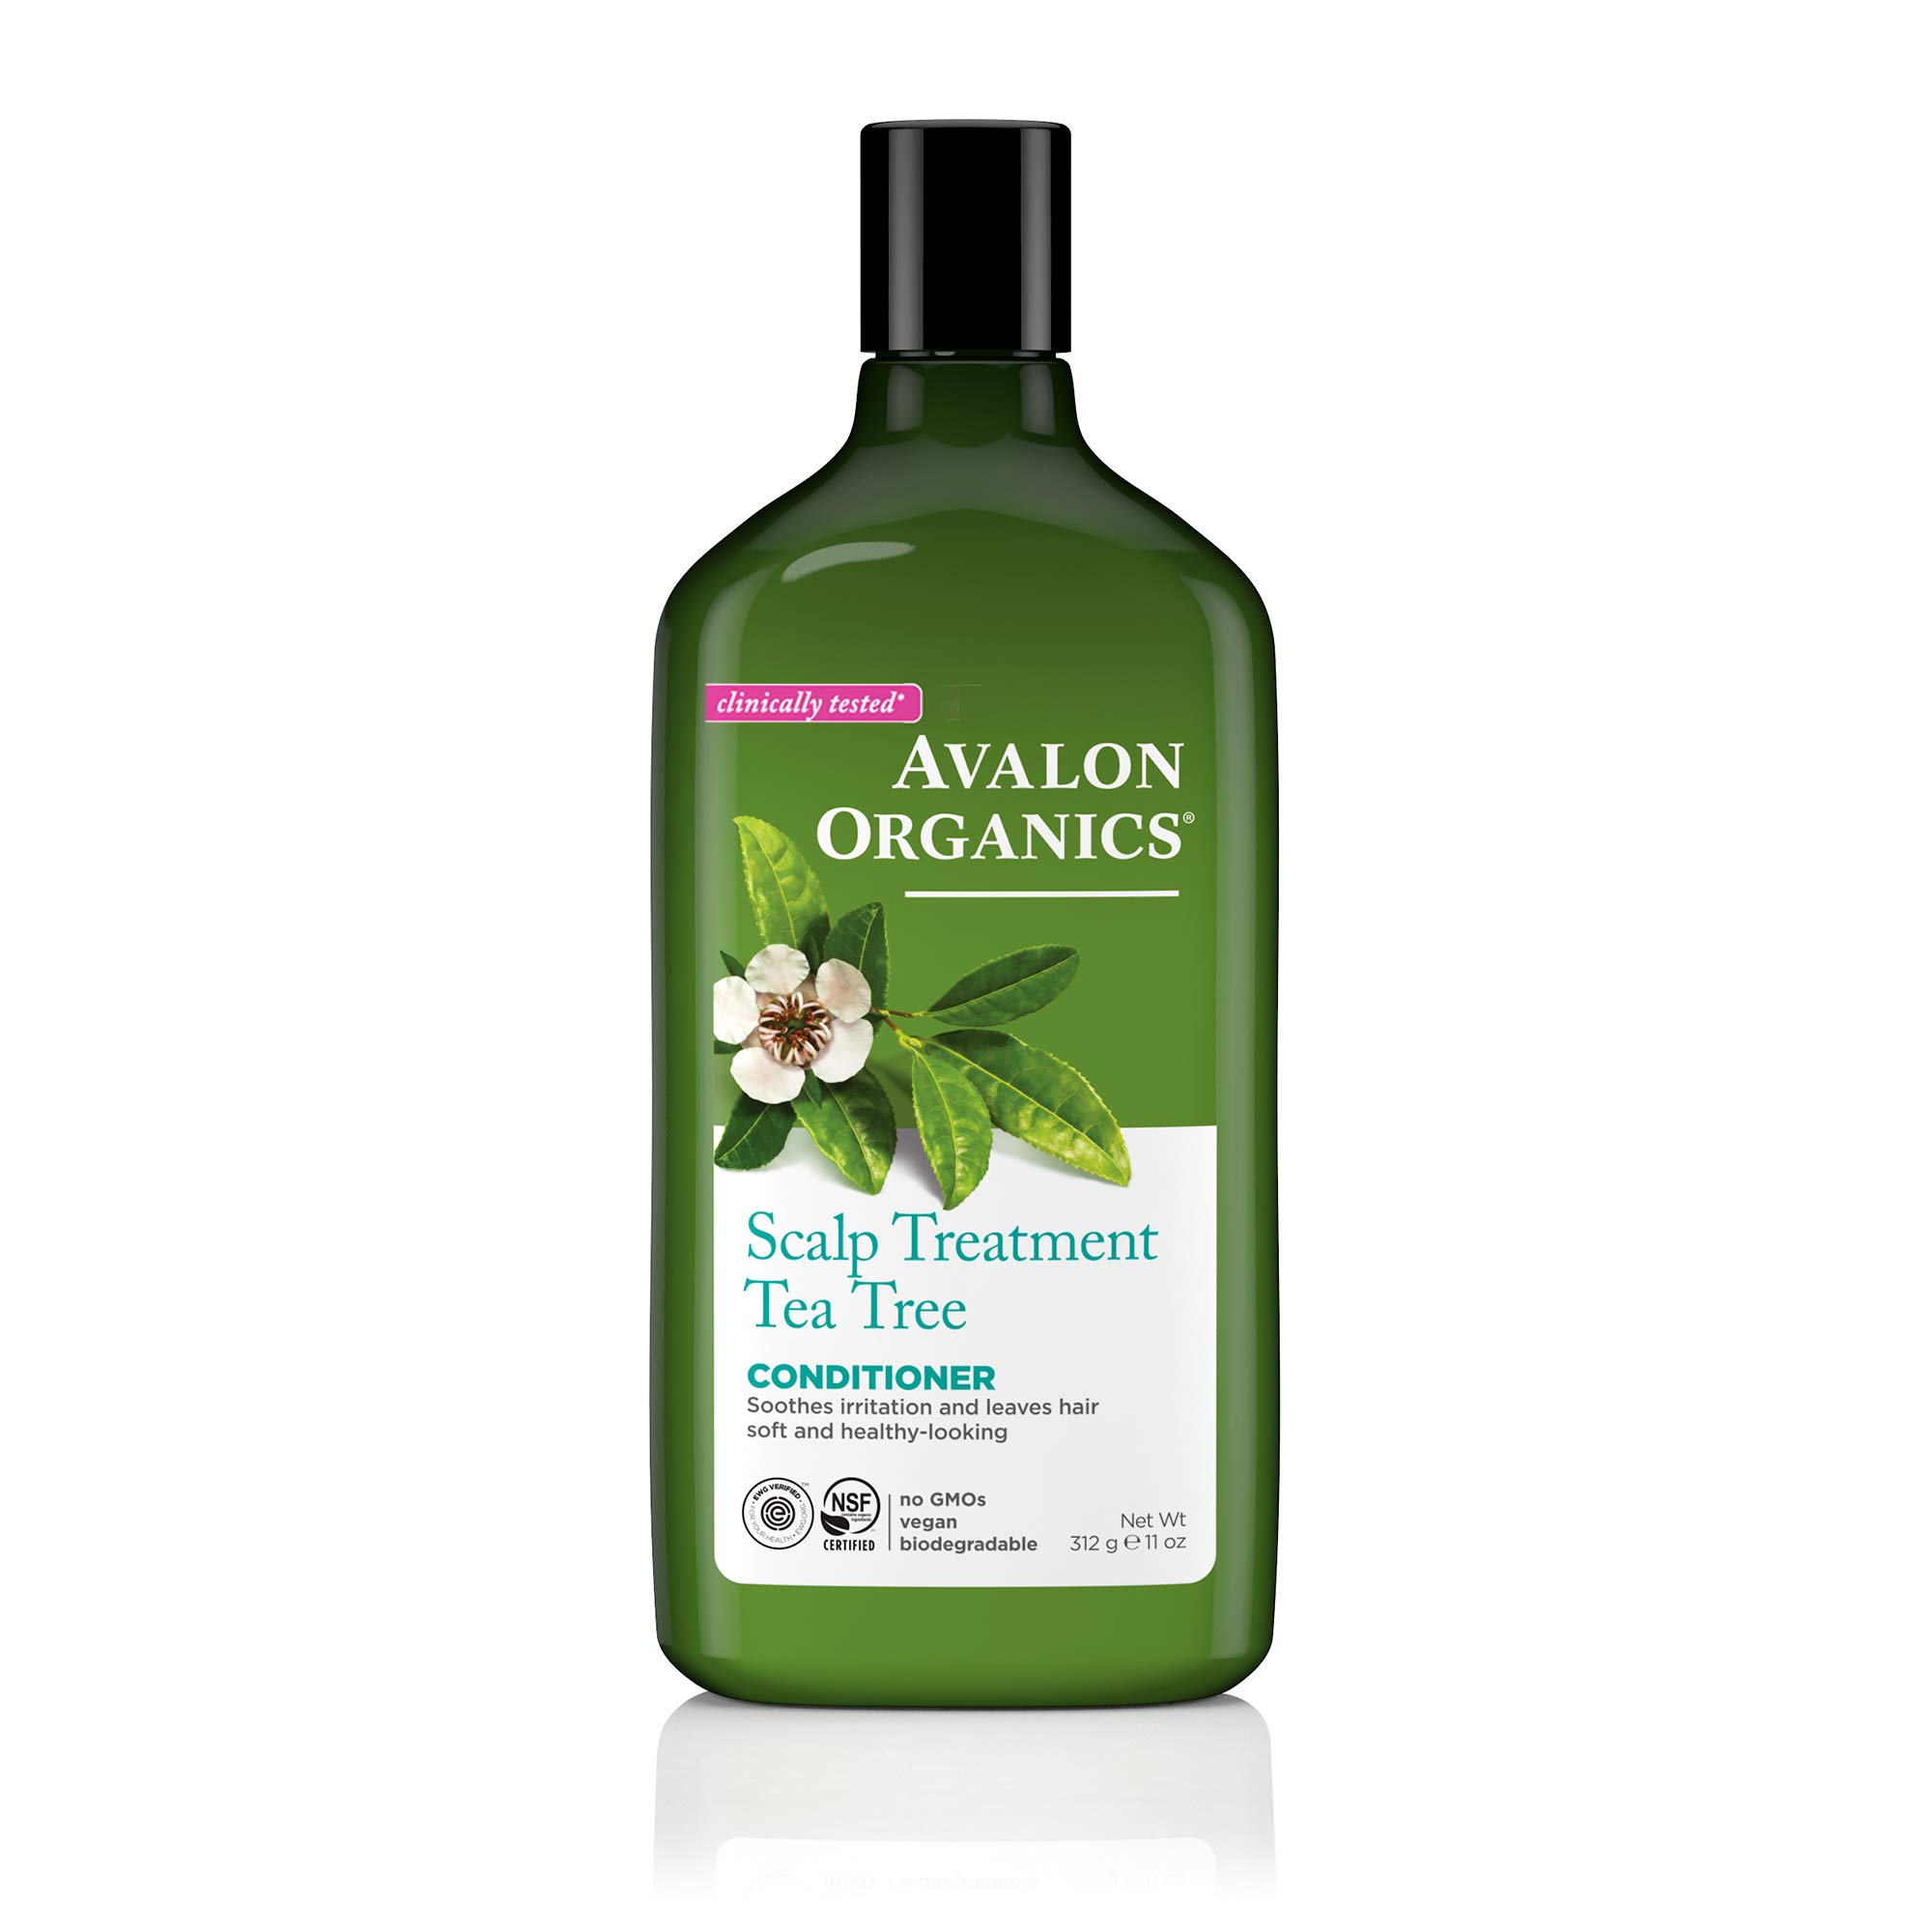 Avalon Organics Conditioner, Scalp Treatment Tea Tree, 11 Oz,Packaging may vary